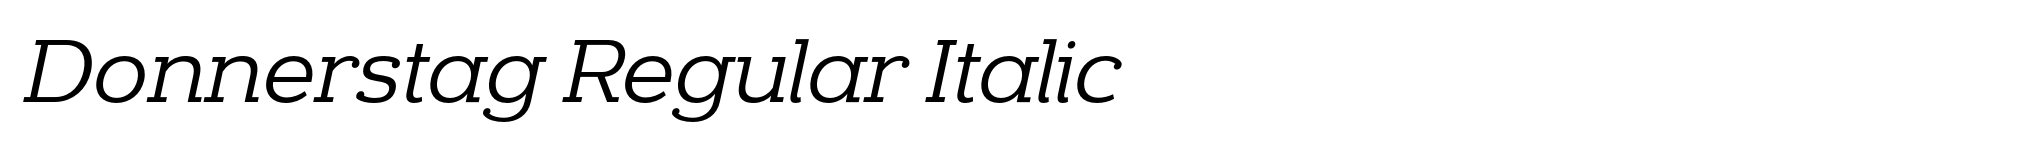 Donnerstag Regular Italic image